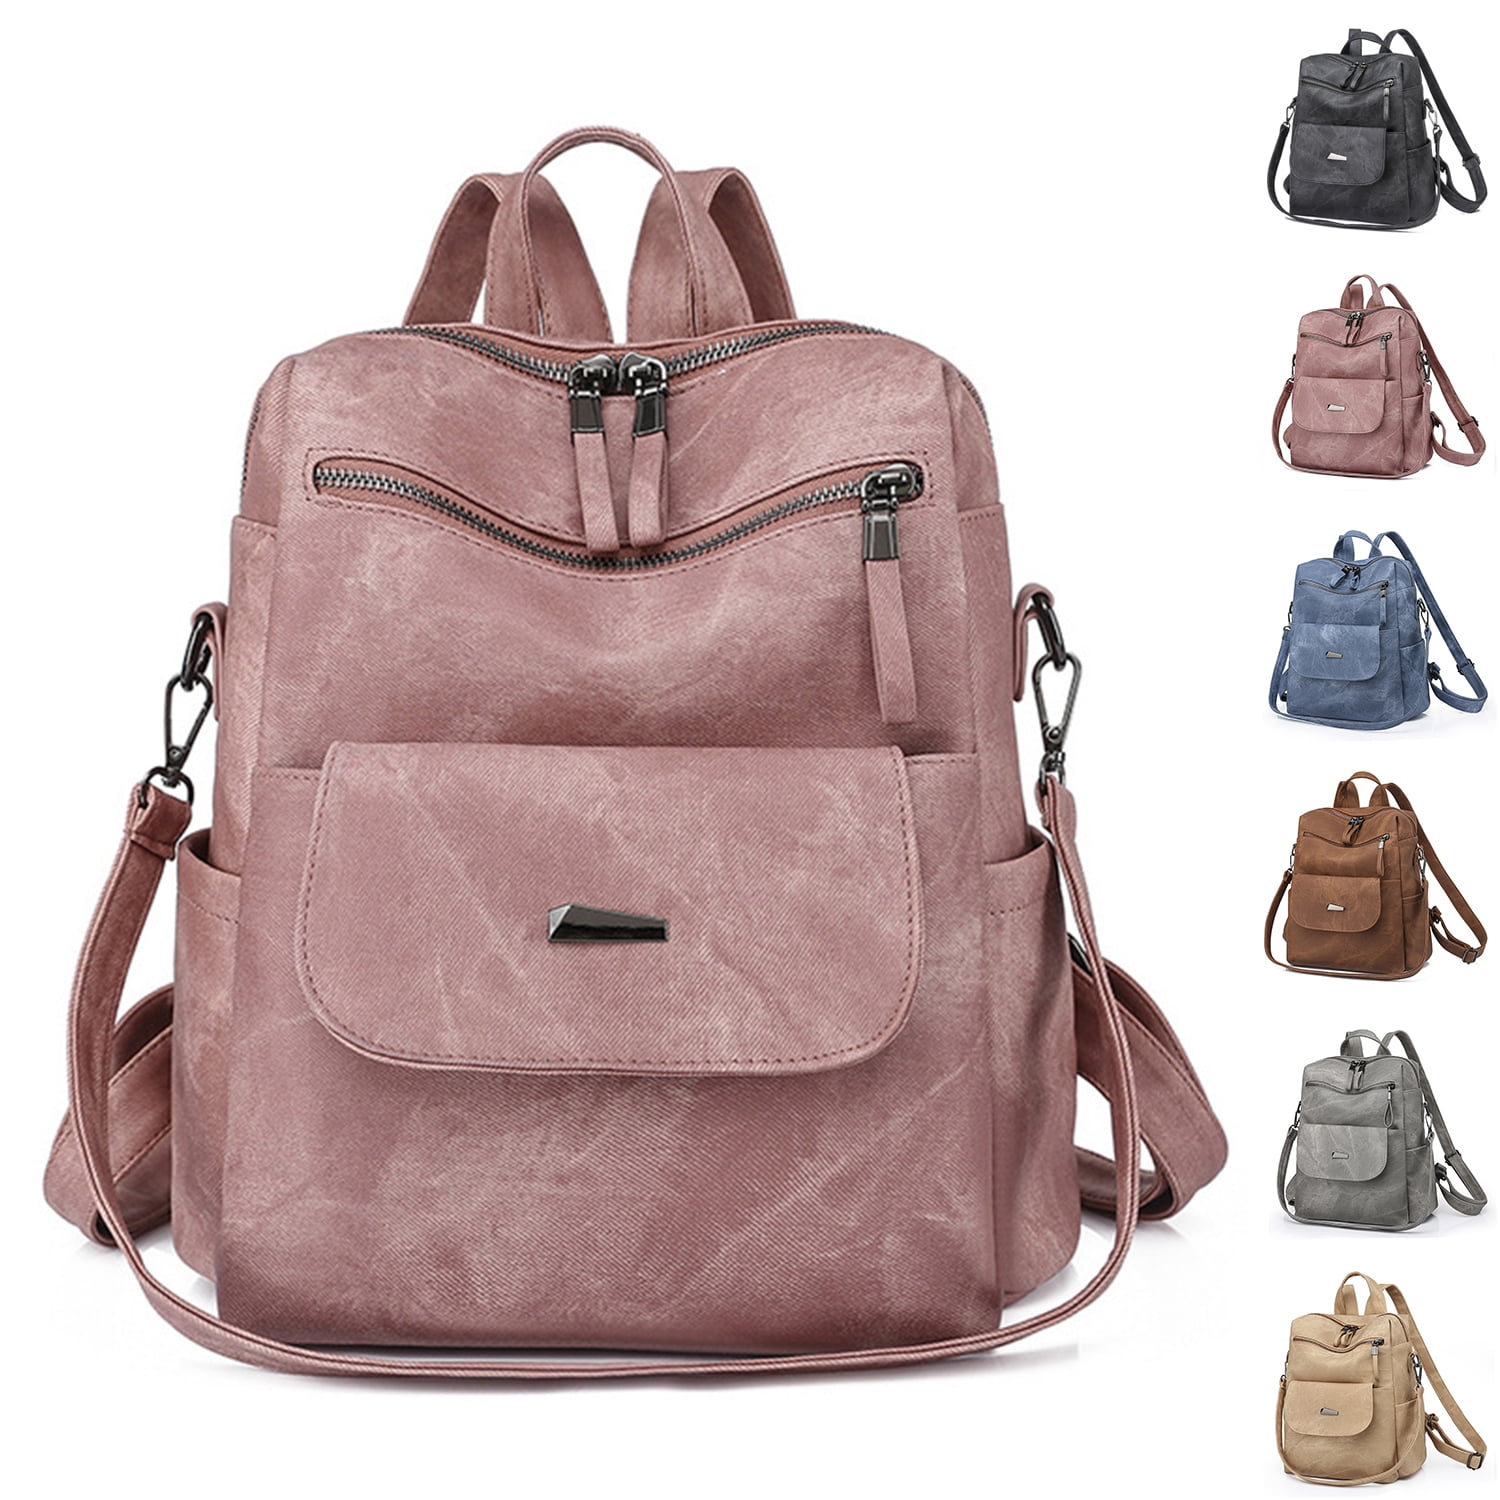 Medium Backpack Purse PU Leather Mini Backpack Travel Casual Ladies Shoulder Bag Pink f66791a3 a480 4acd 9a95 83a8a26cc122.465ff19a38d28415433716564e637dc4